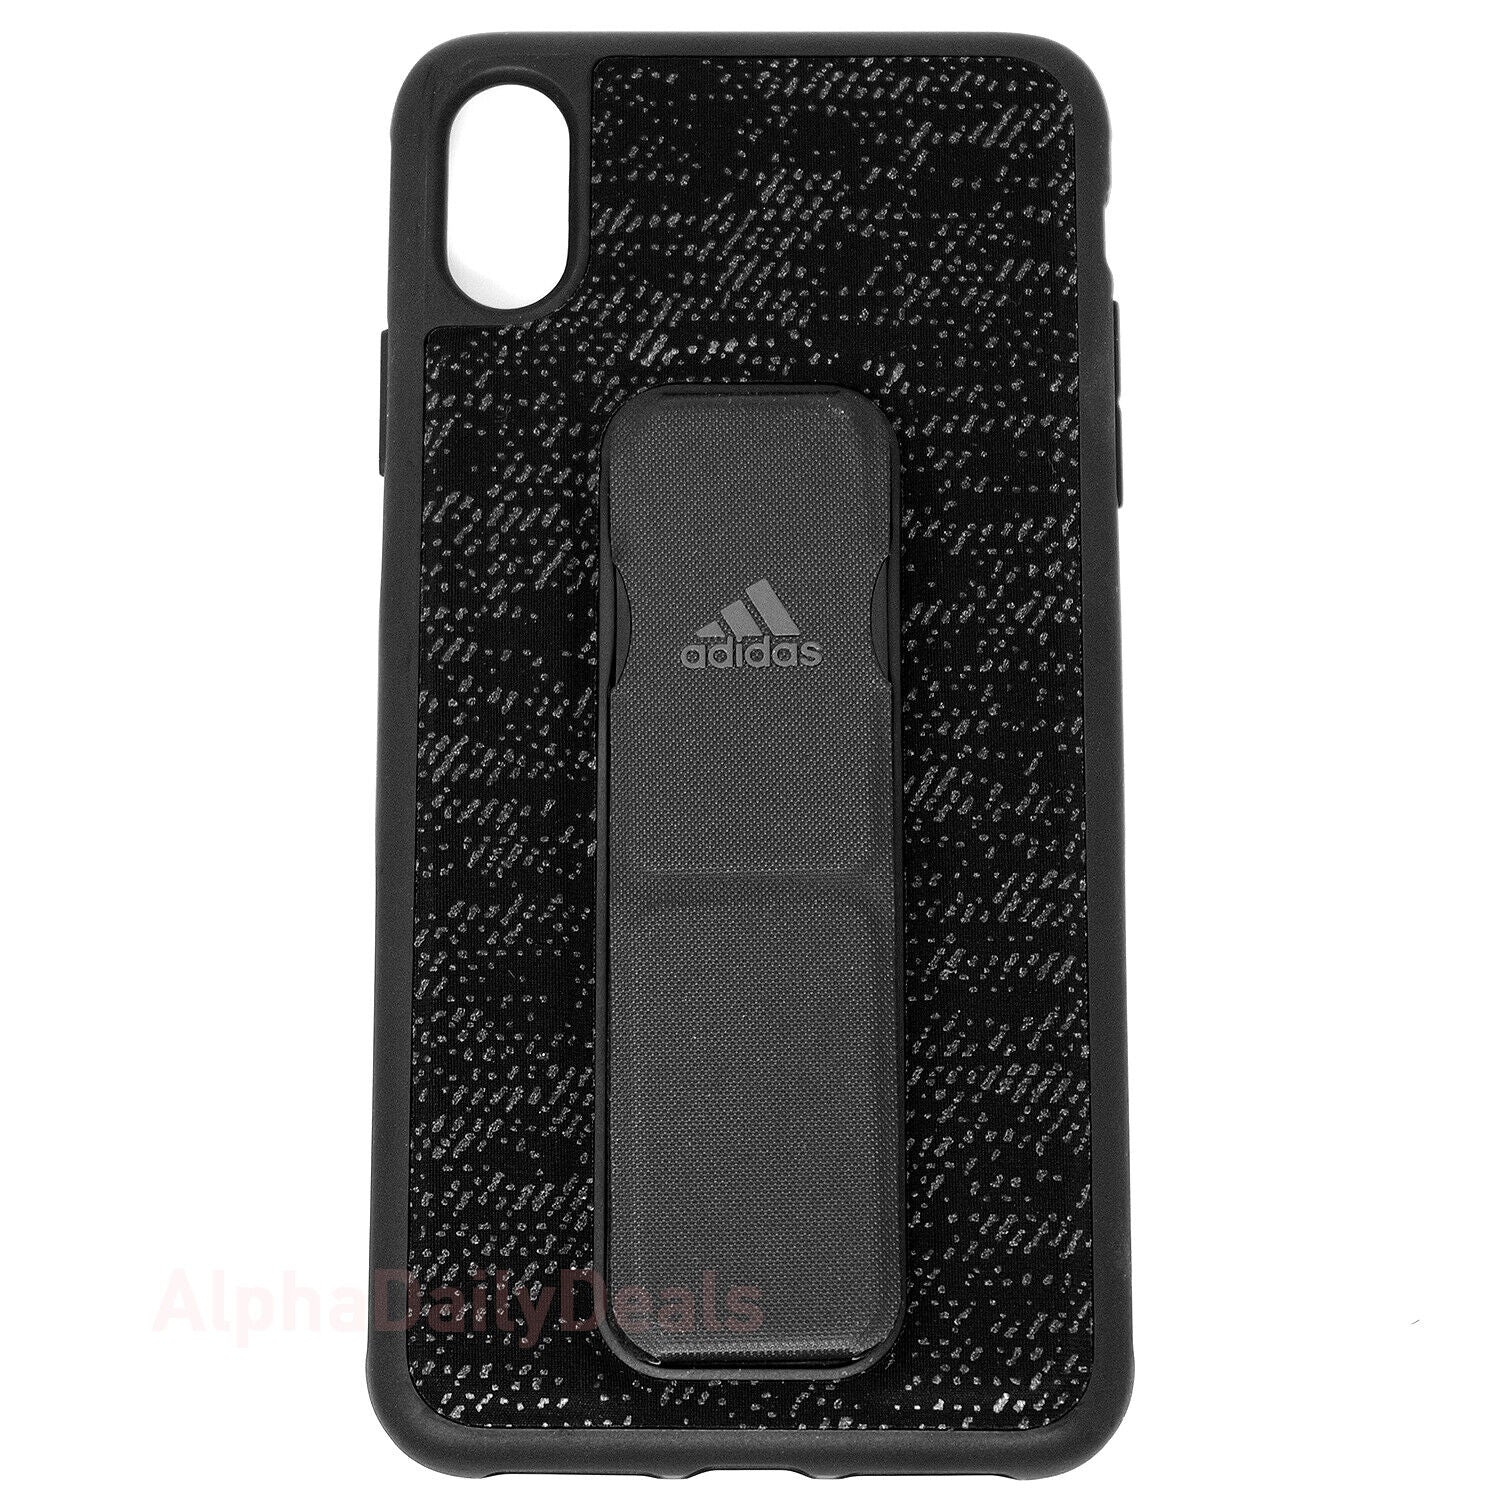 Adidas iPHONE X XS Protective Grip Case Black